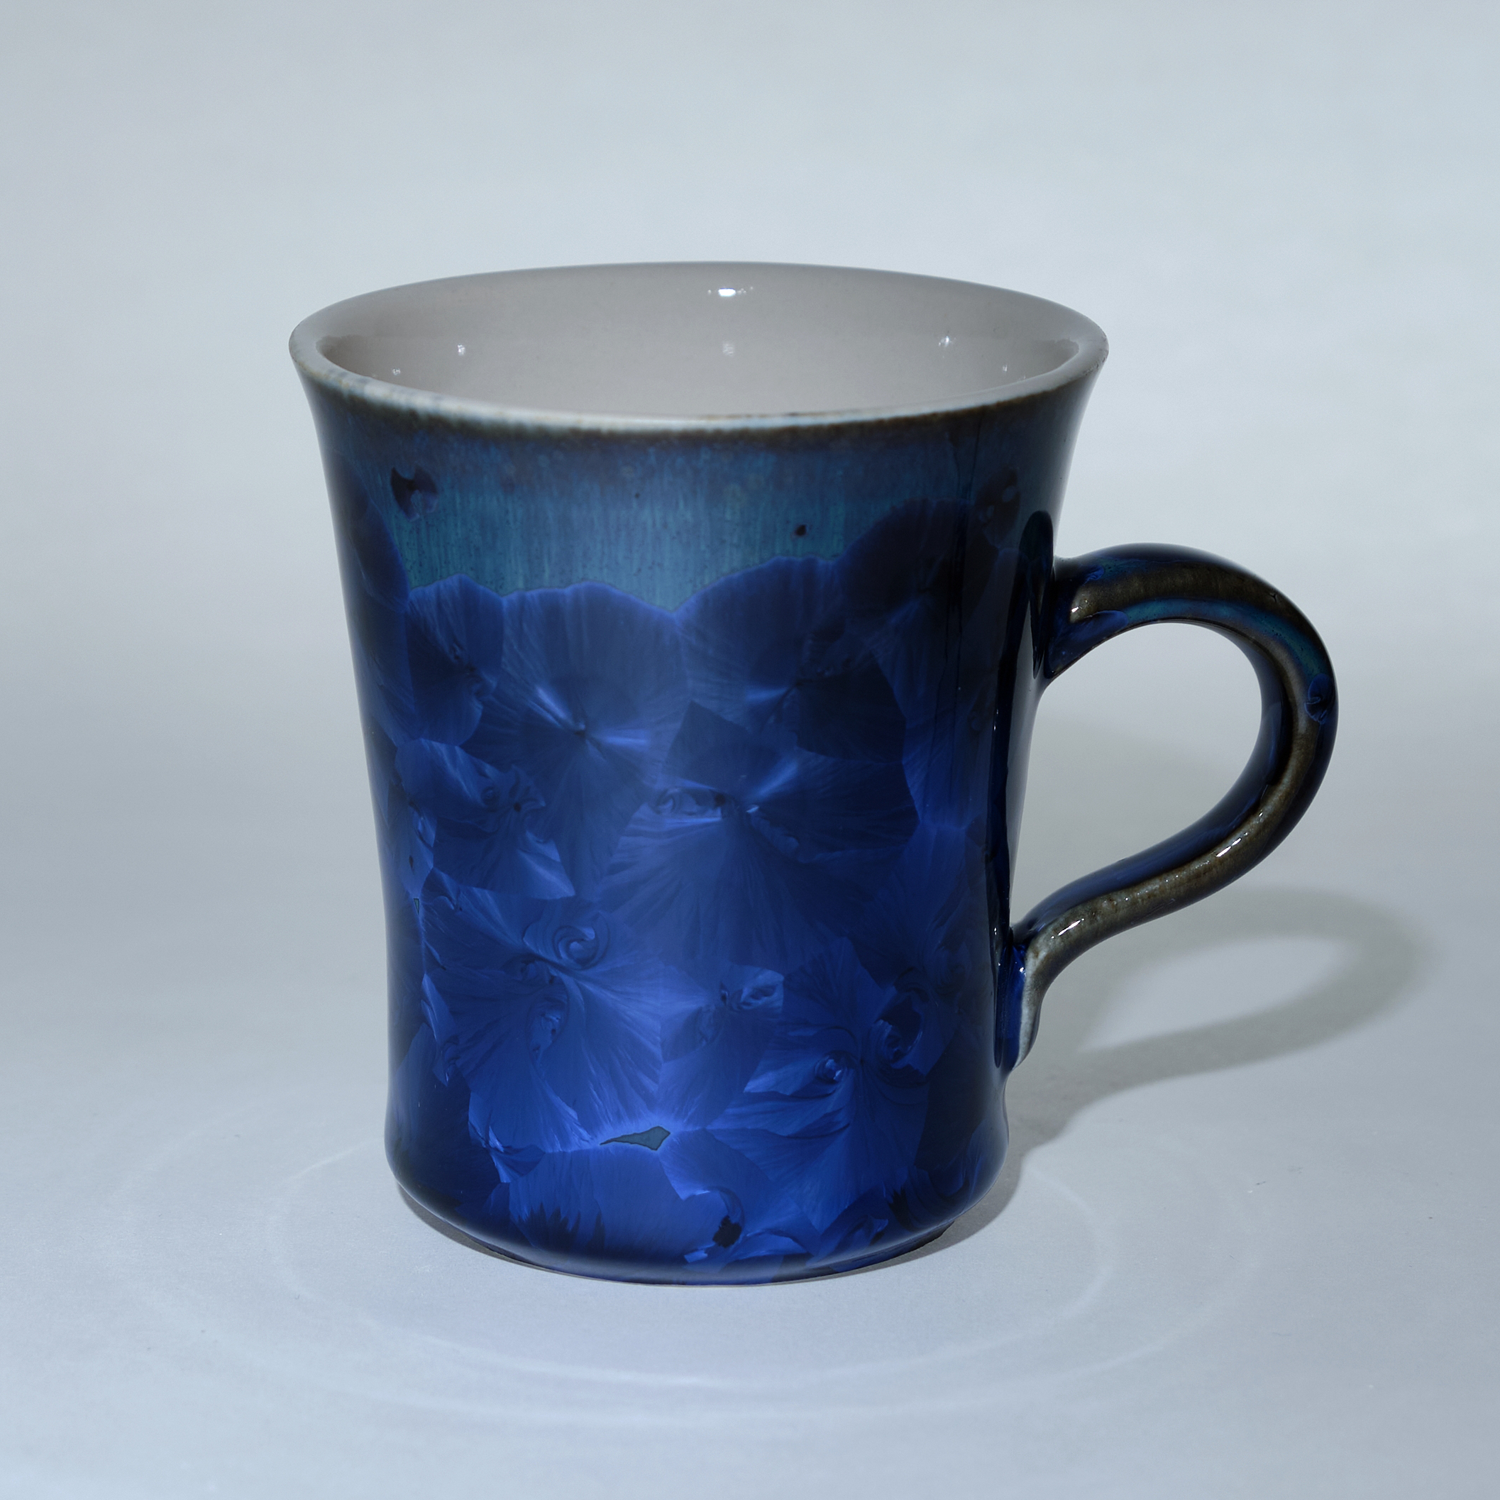 Yumiko Katsuya: Royal Blue Mug Product Image 1 of 1